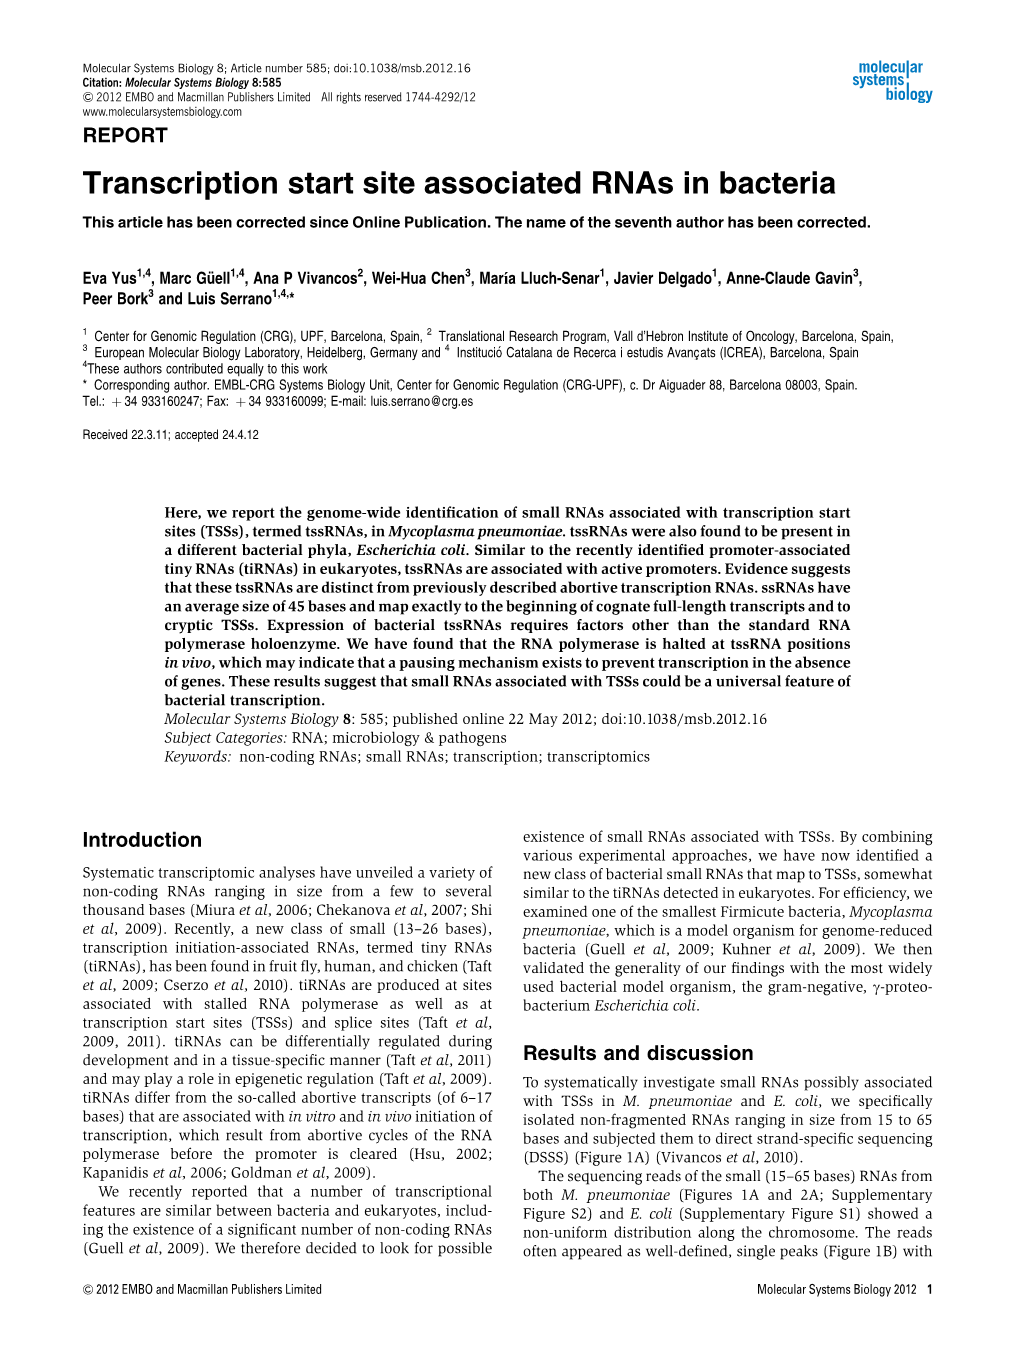 Transcription Start Site Associated Rnas in Bacteria